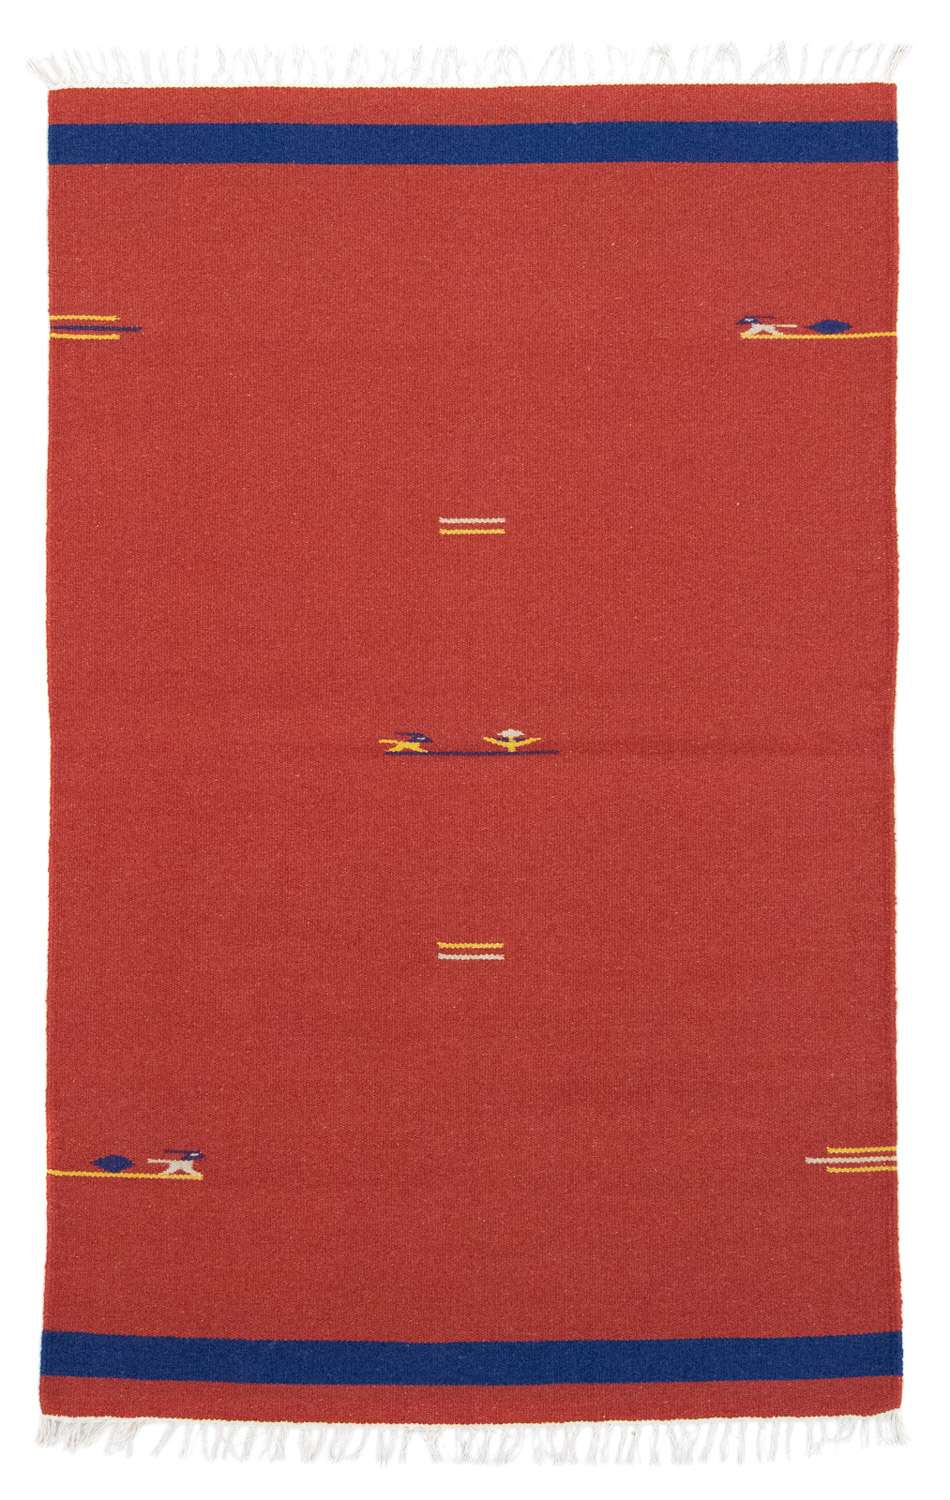 Kelim tapijt - Trendy - 180 x 120 cm - rood